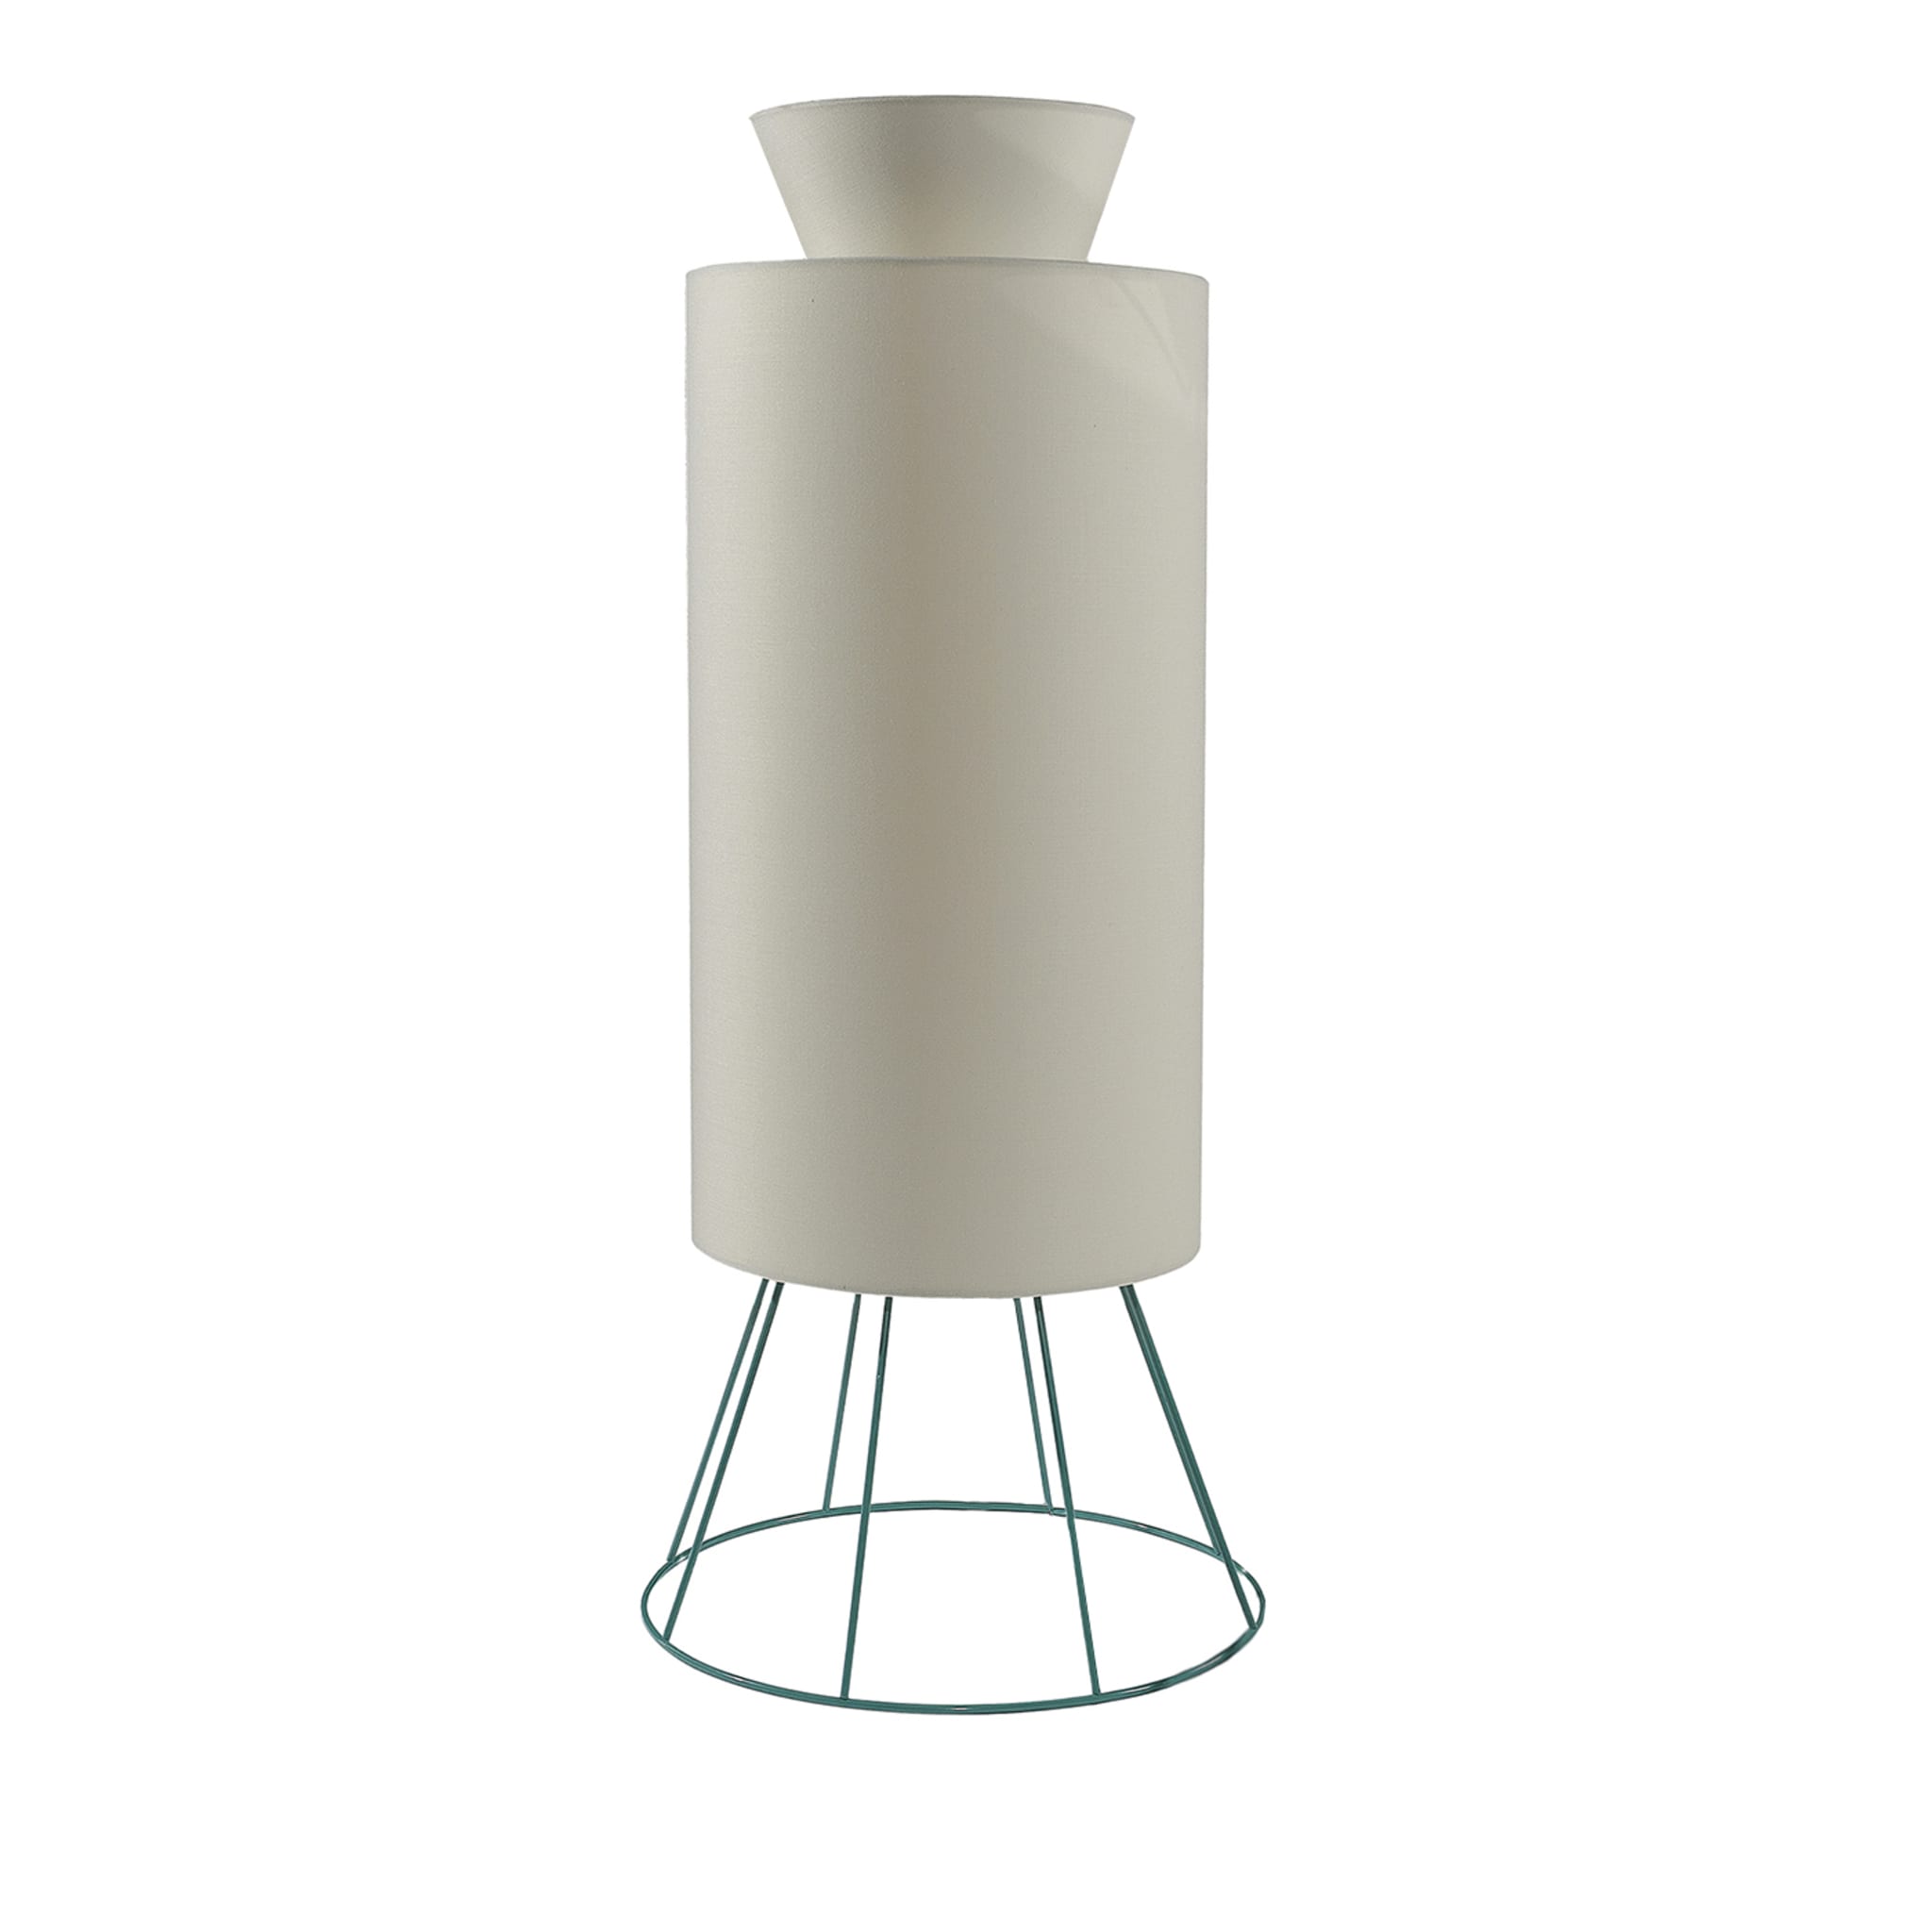 Balloon Mint-Green & White Table Lamp by Giorgia Zanellato - Main view